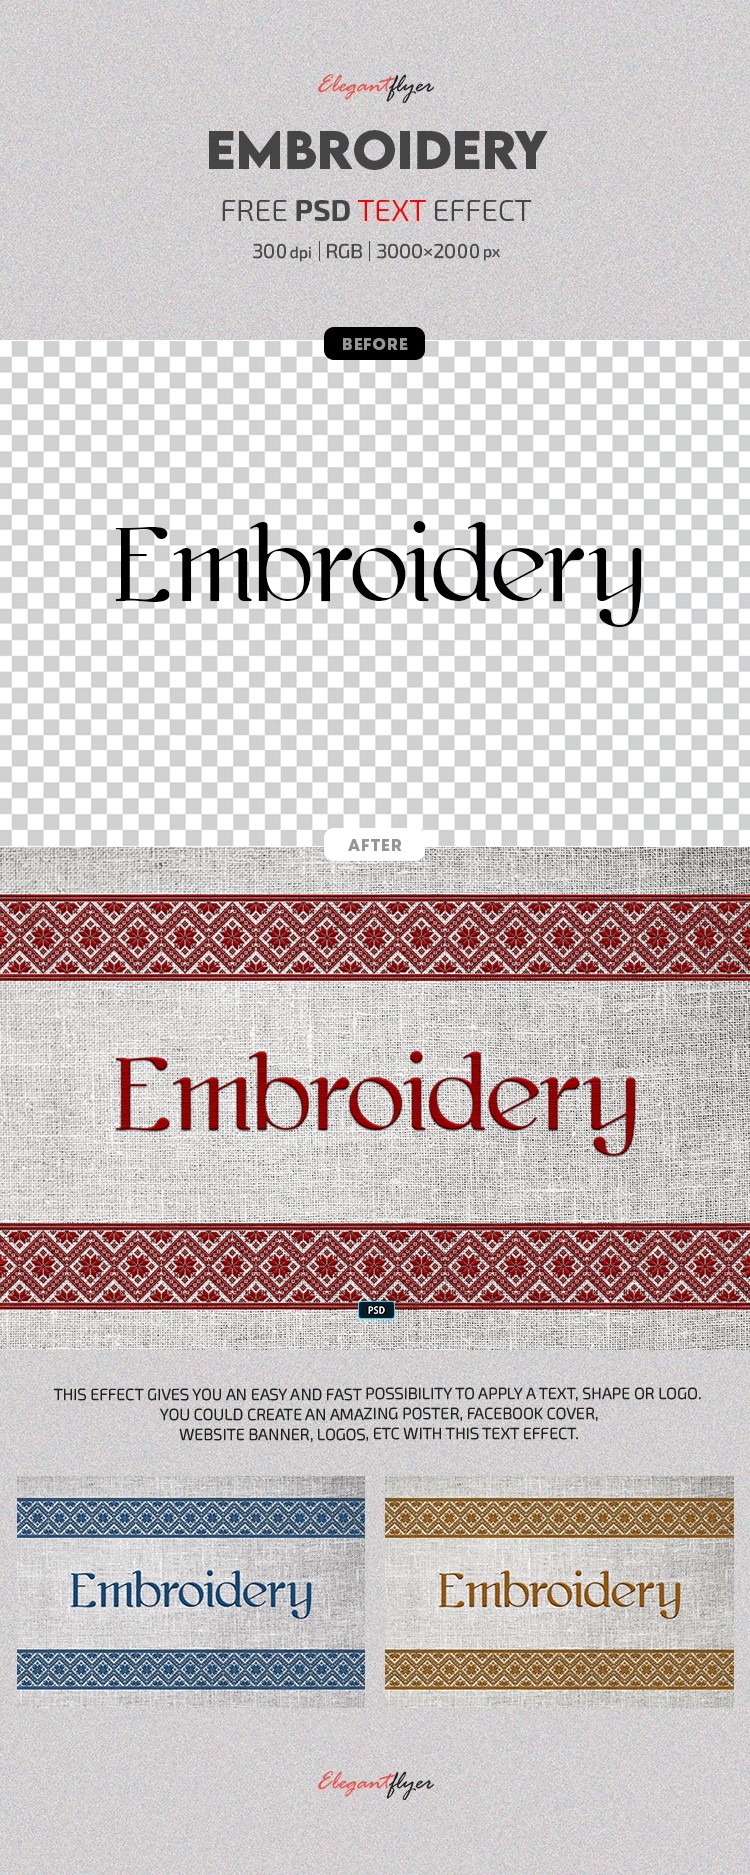 Embroidery Text Effect by ElegantFlyer